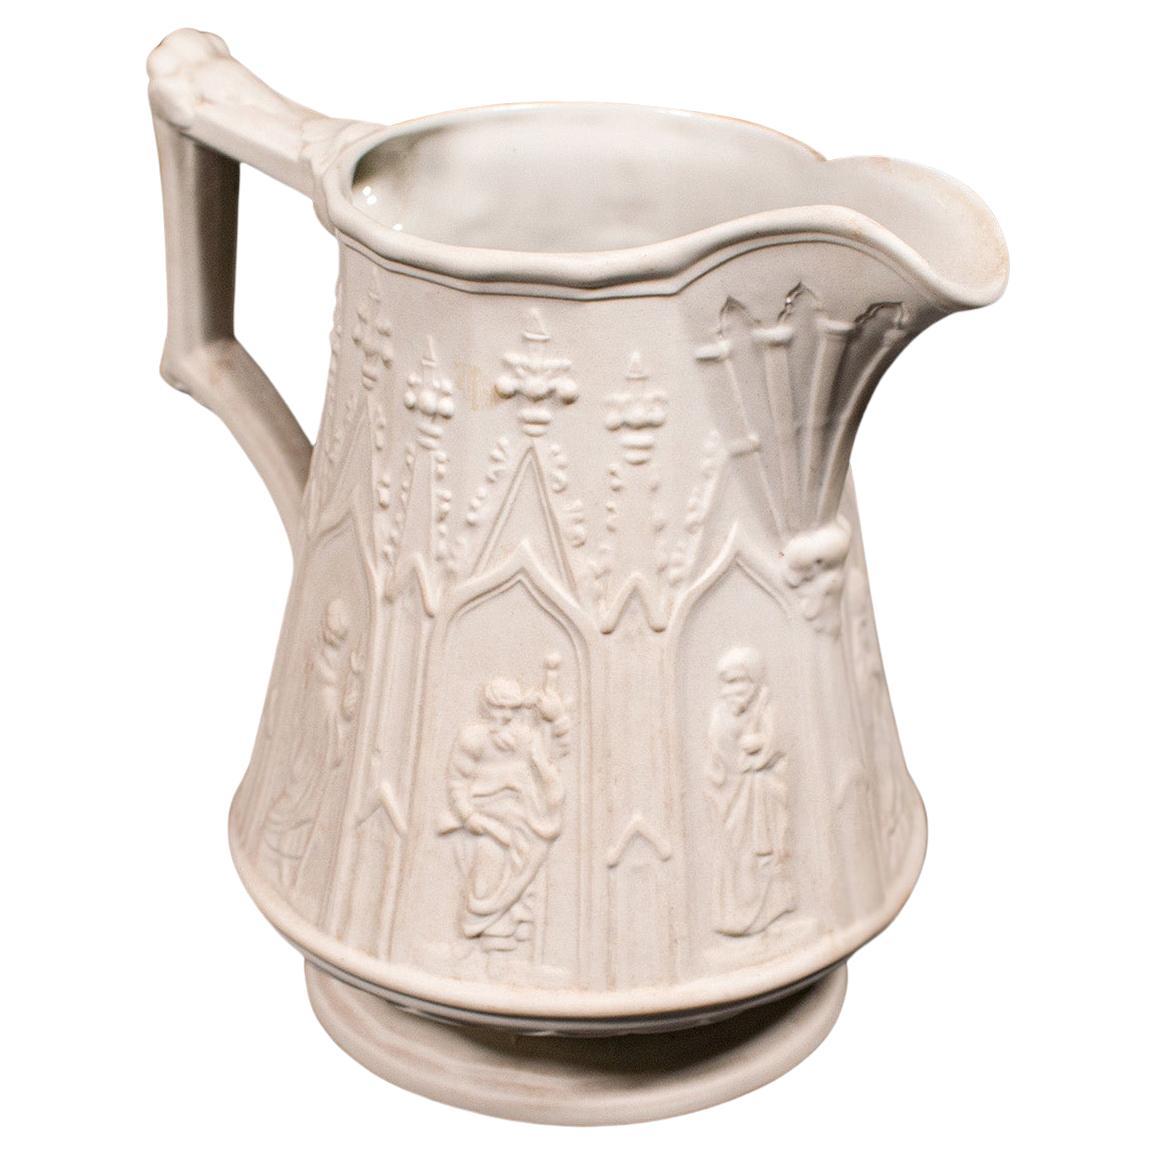 Vintage Pouring Jug, English, Parian Ware Ceramic, Serving Creamer, Decorative For Sale